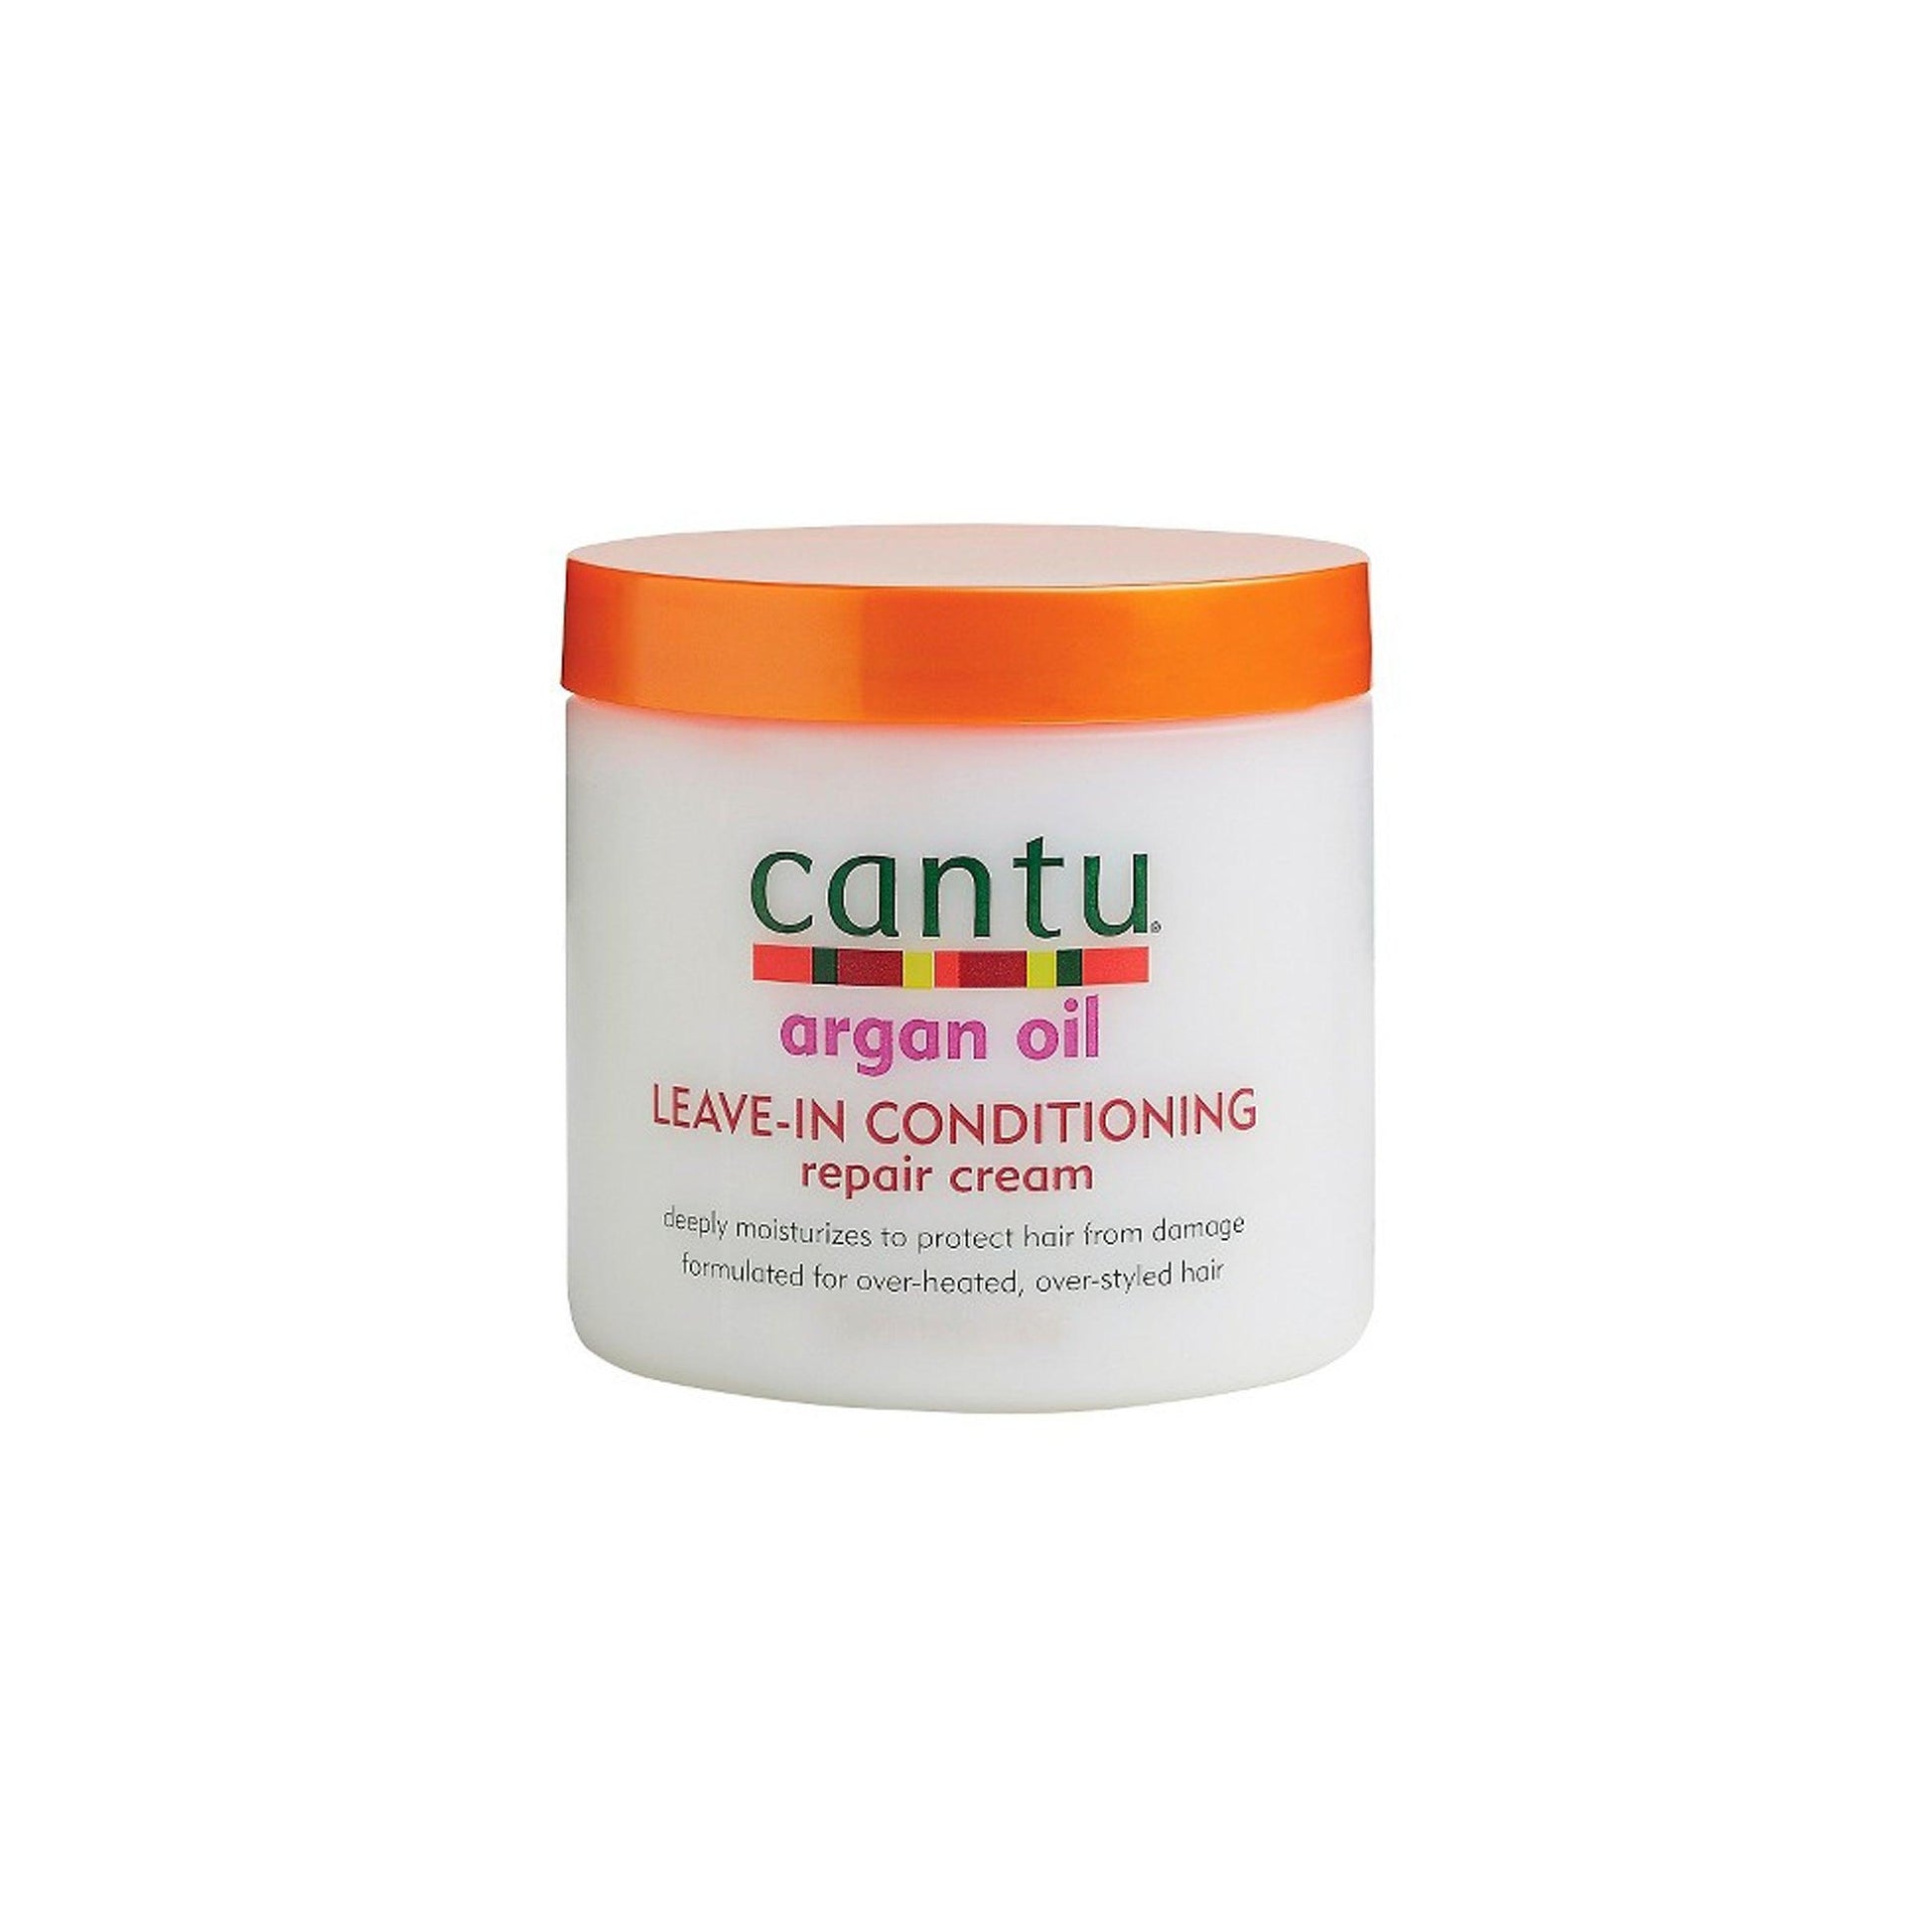 Cantu Argan Oil Leave in Conditioning Repair Cream - Beauty Bounty